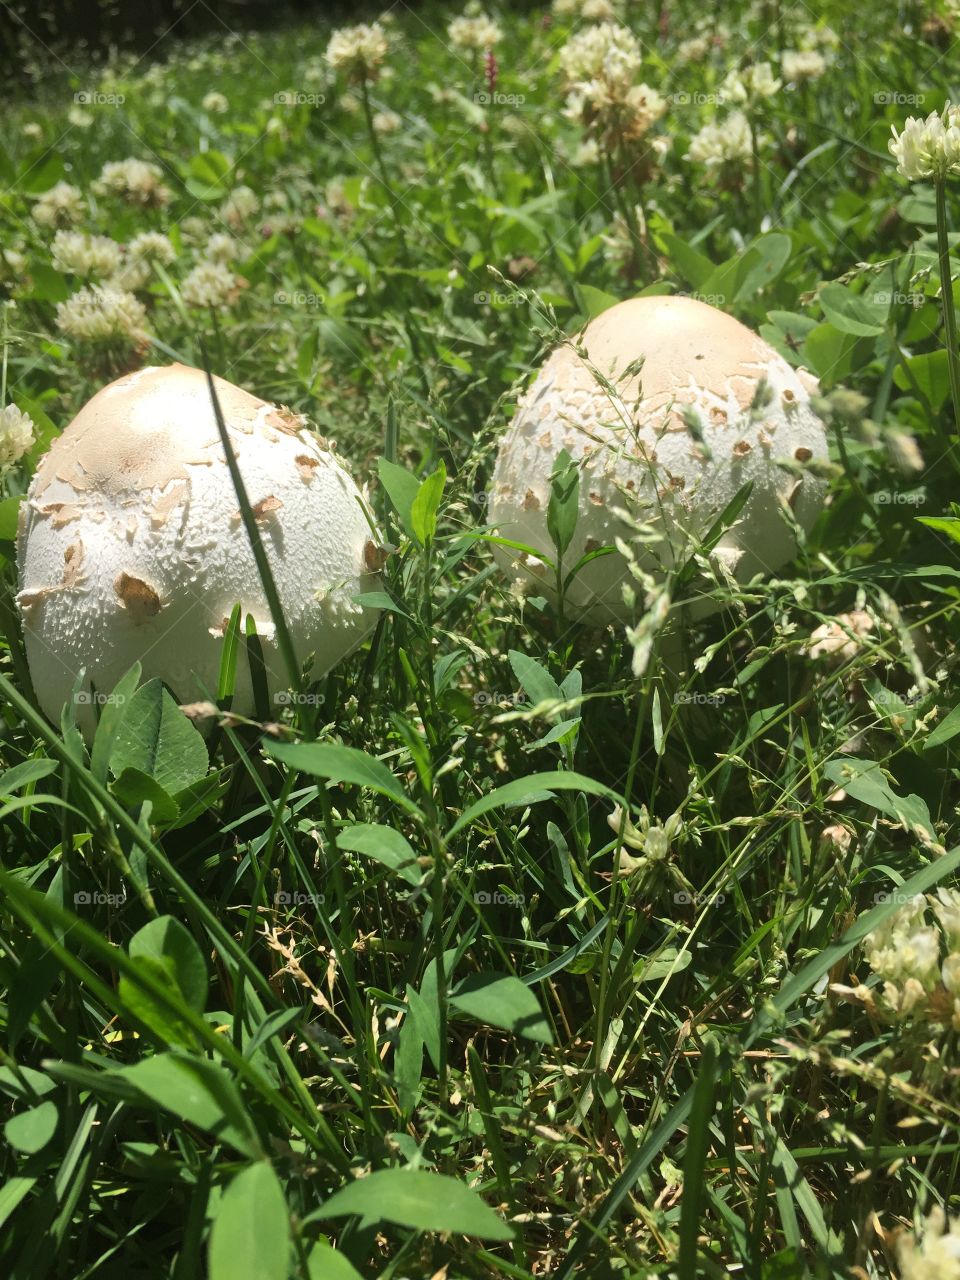 Yard white yard mushroom fungus